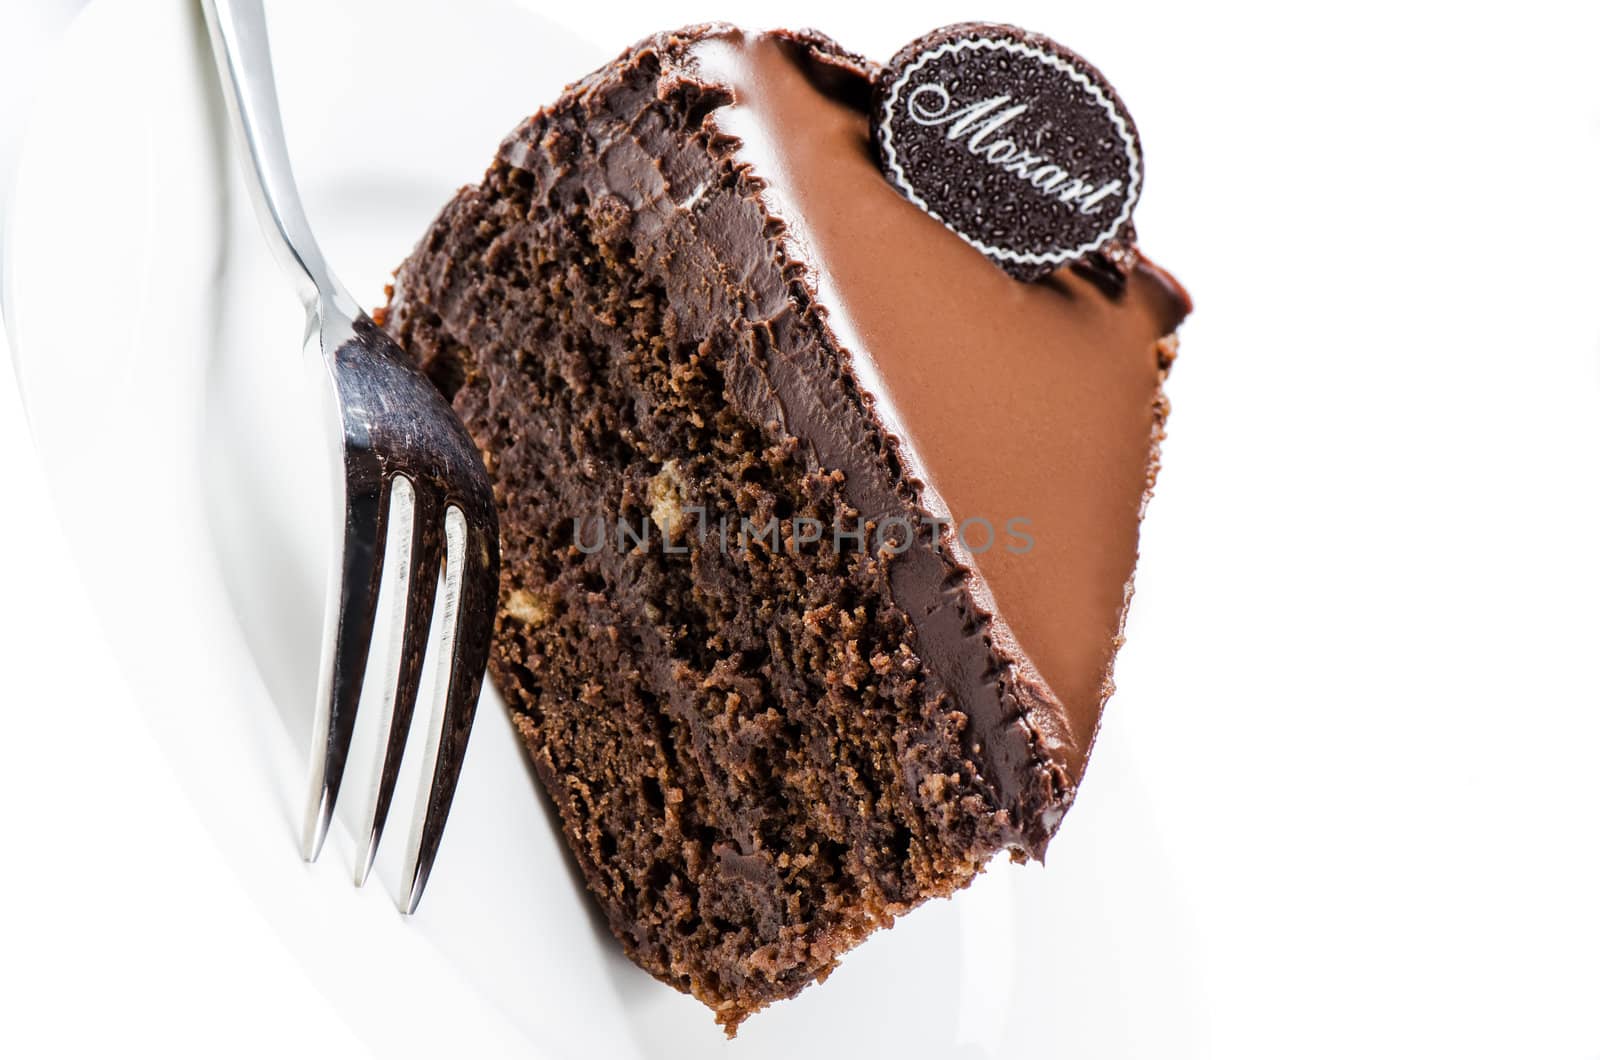 Piece of chocolate cake by Nanisimova